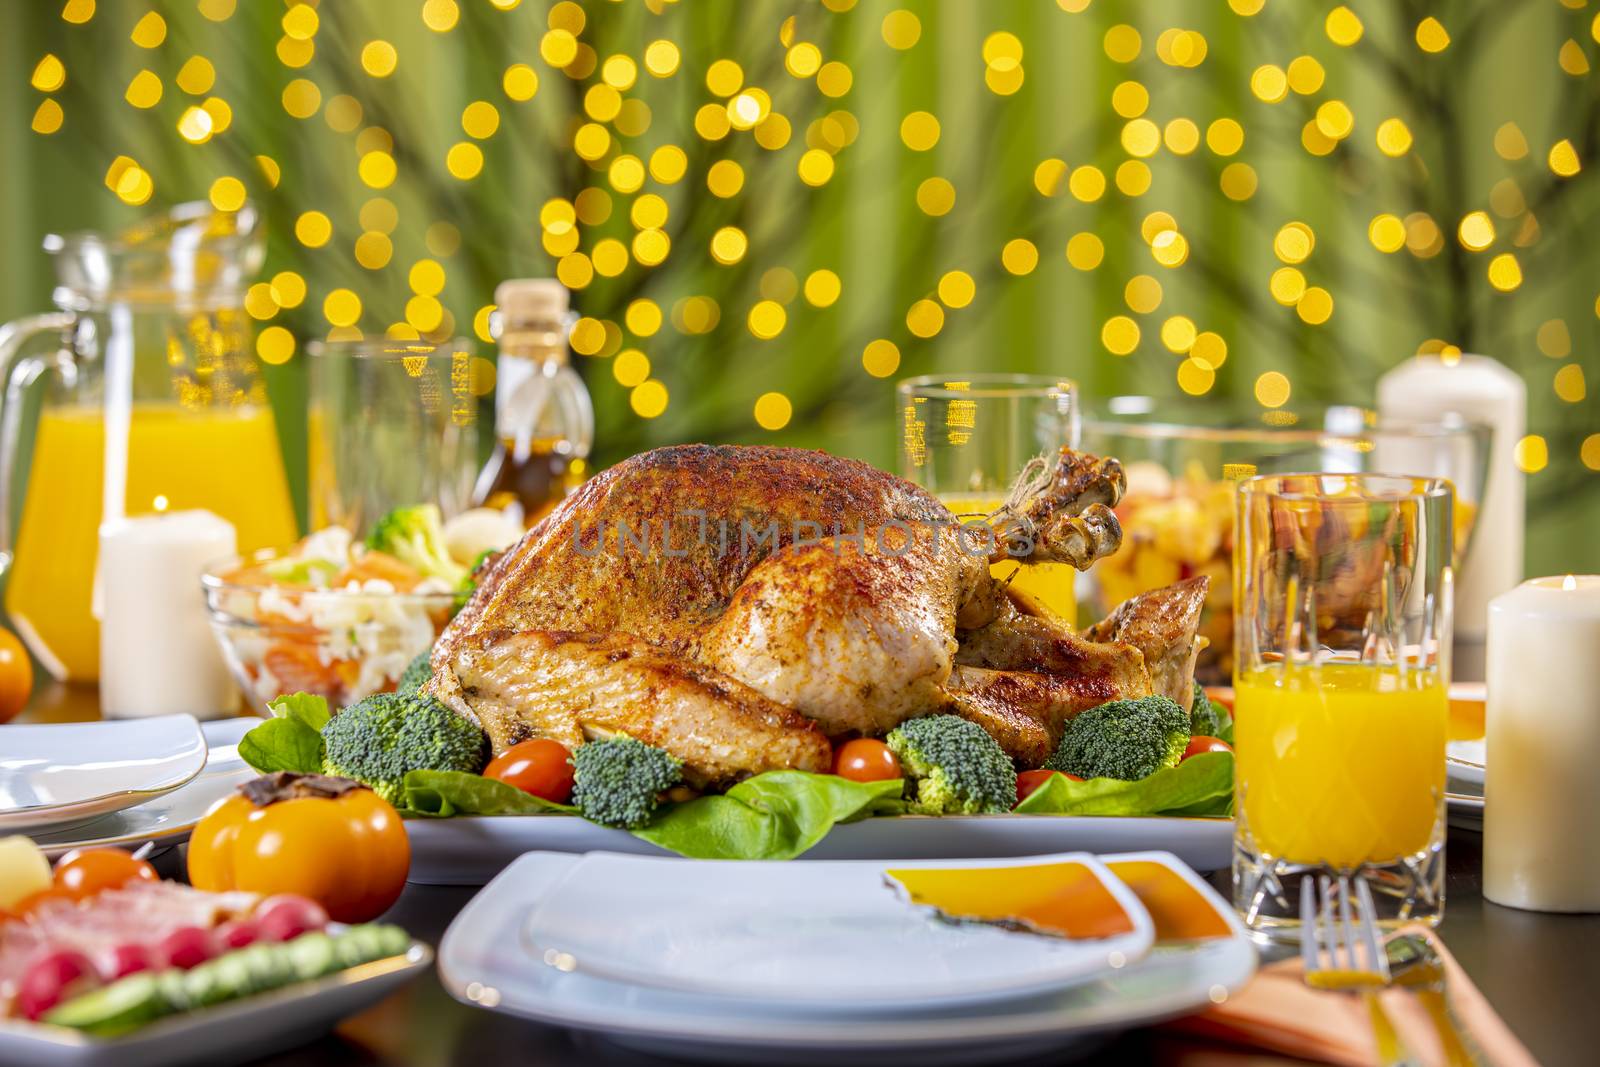 Celebrating Thanksgiving with roasted turkey on festive table. Roasted turkey on festive table for Thanksgiving celebration